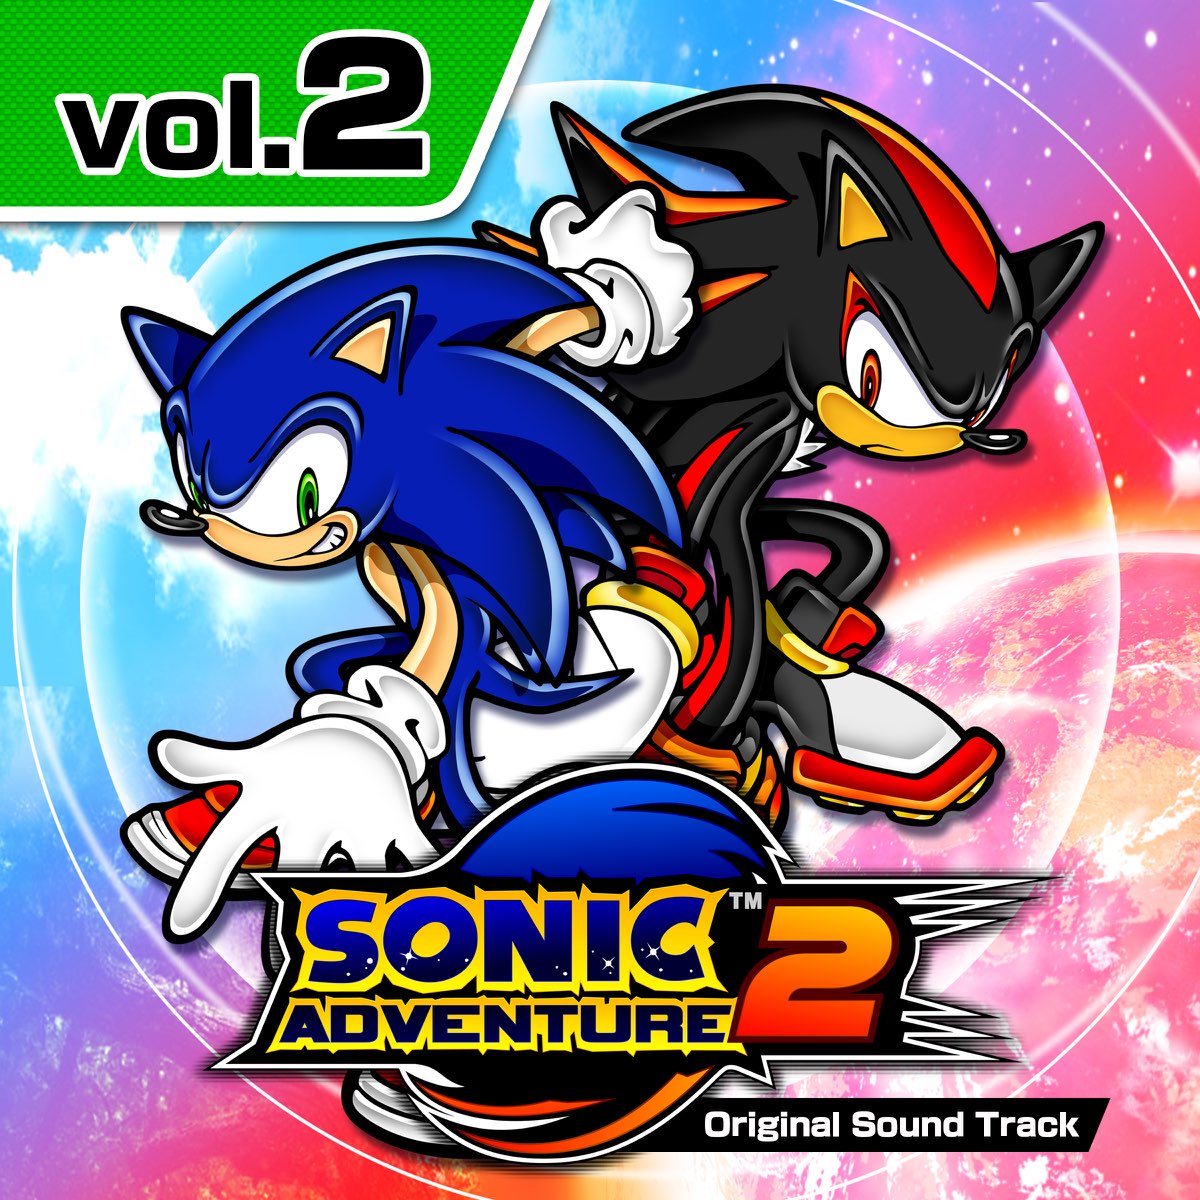 Sonic Adventure 2 (Original Soundtrack), Vol. 2 - Album by Various